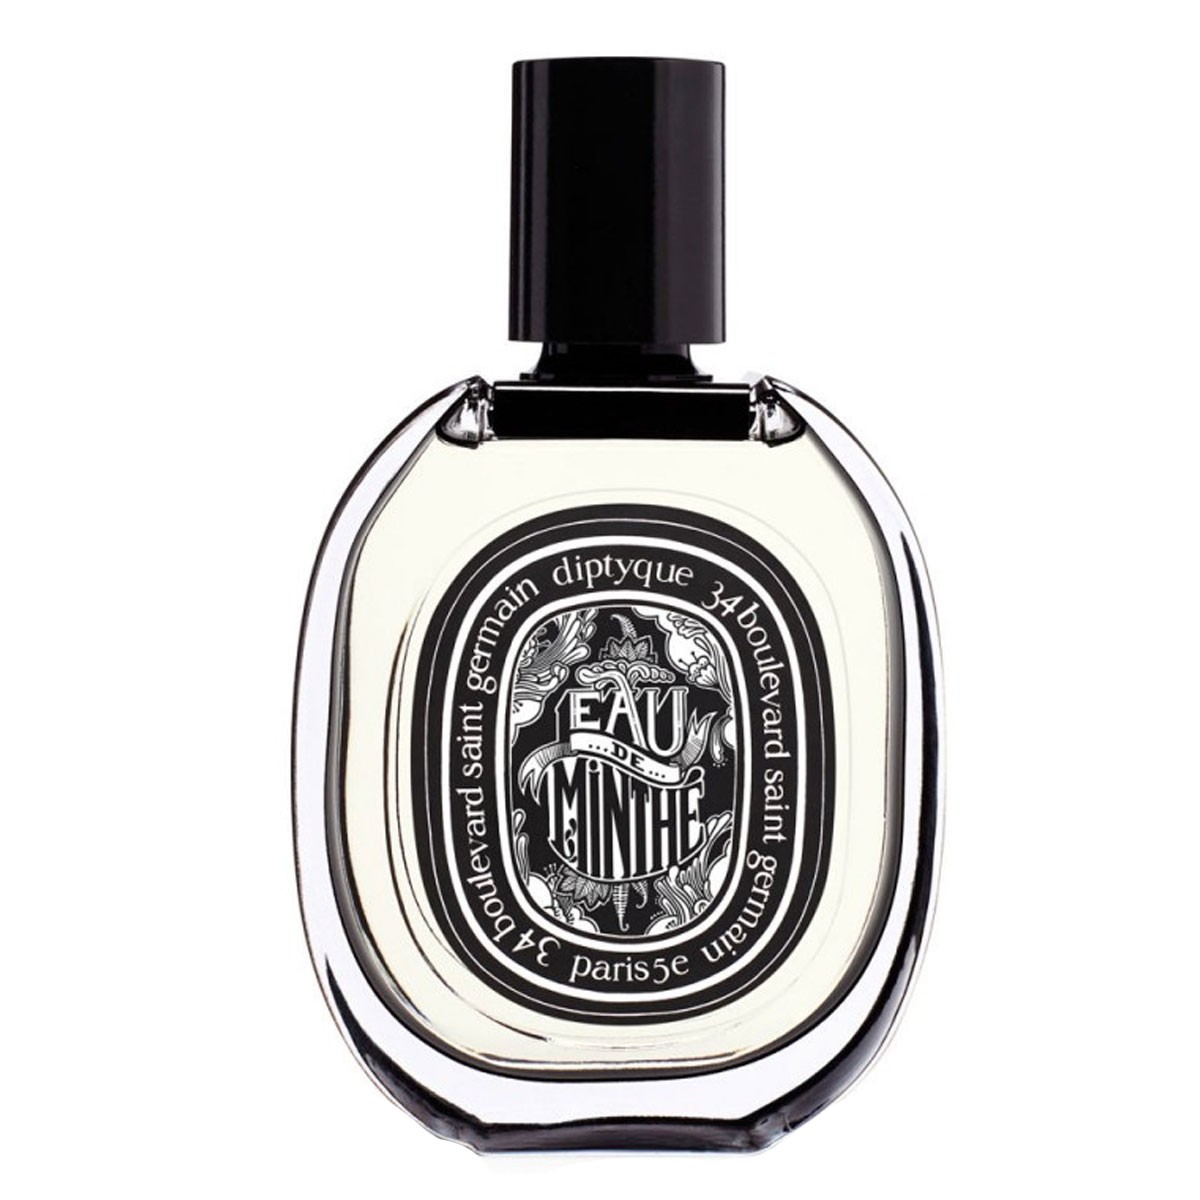 Diptyque Eau Minthe Perfume - fragancia fresca